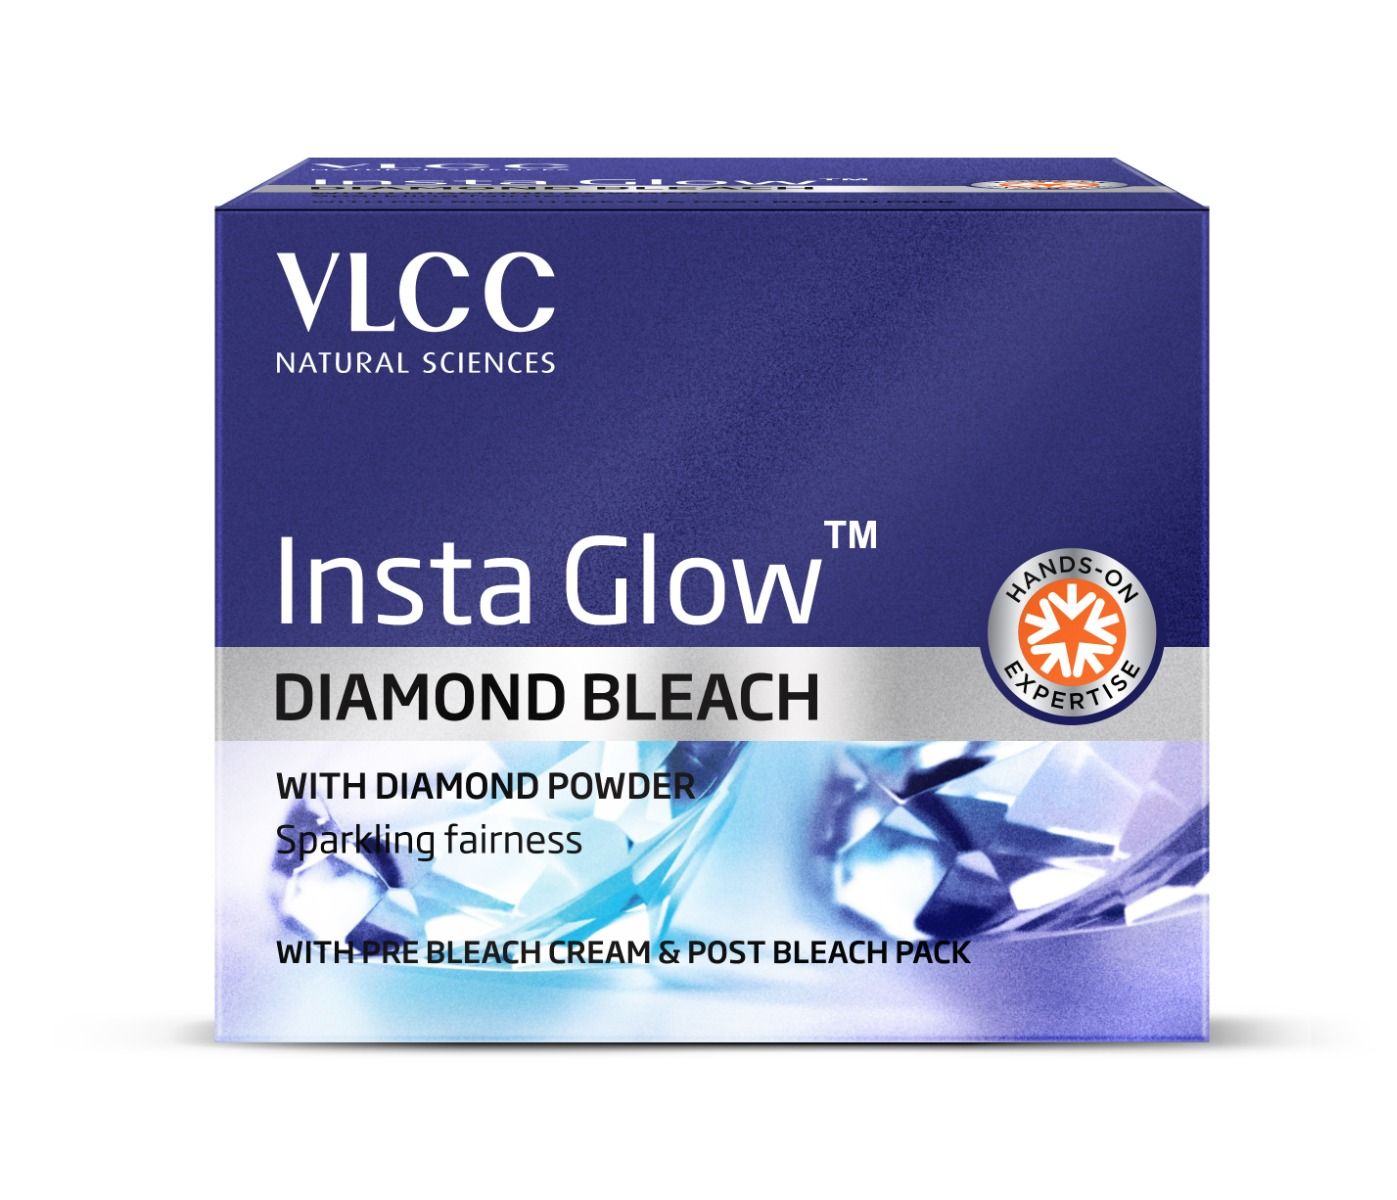 VLCC Instaglow Diamond Bleach, 30 gm, Pack of 1 